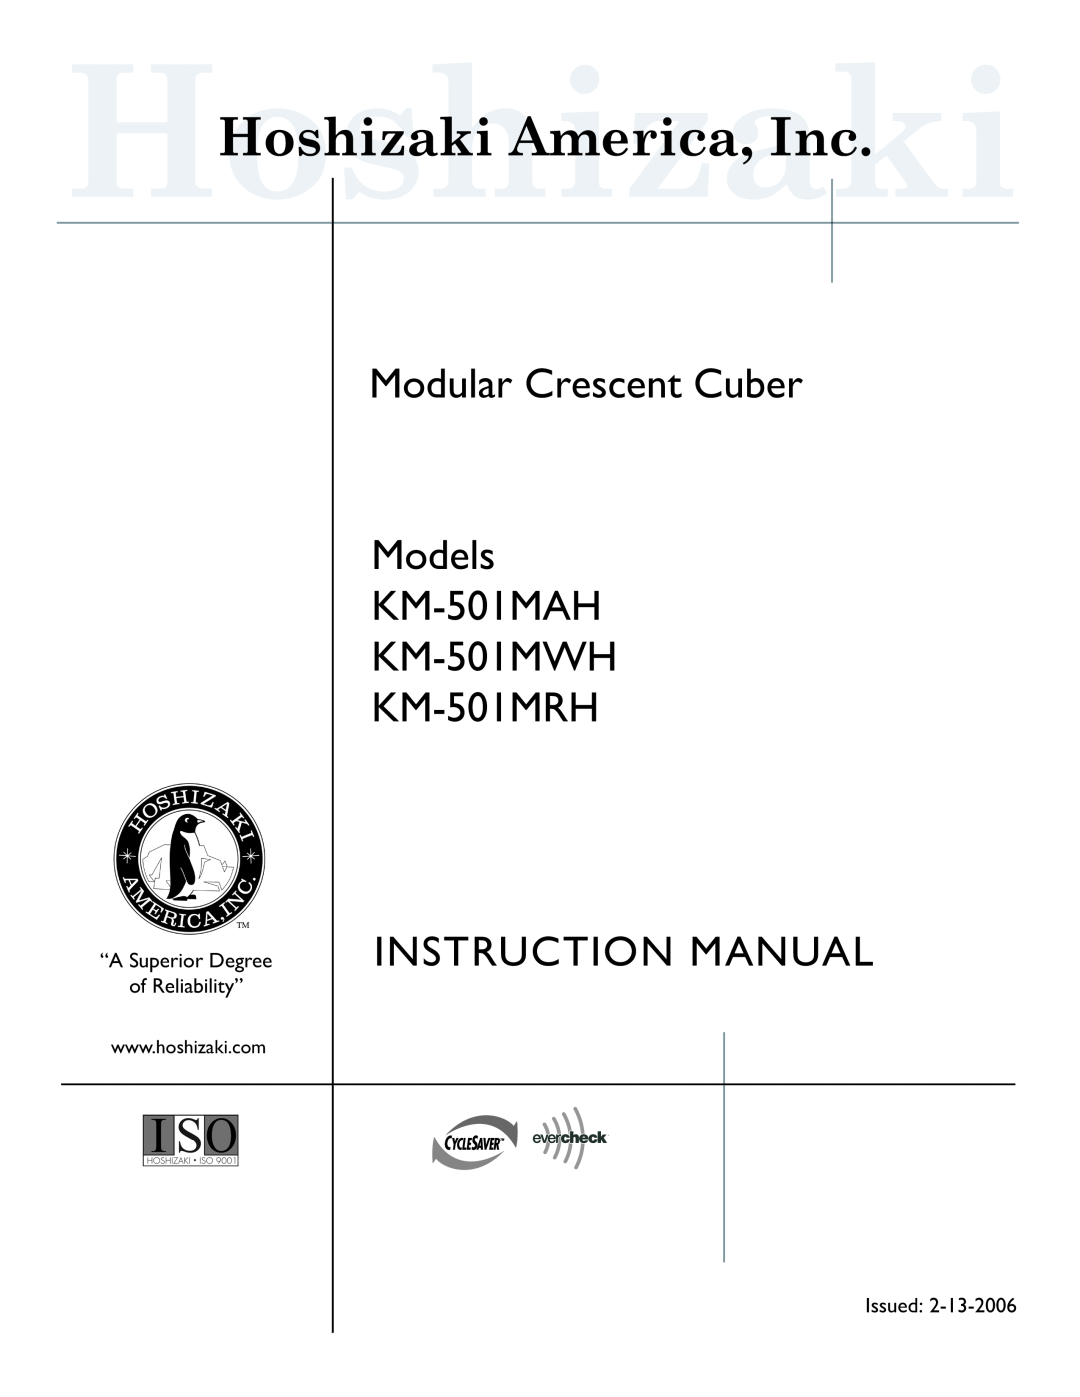 Hoshizaki instruction manual Modular Crescent Cuber Models KM-501MAH KM-501MWH KM-501MRH, Issued 